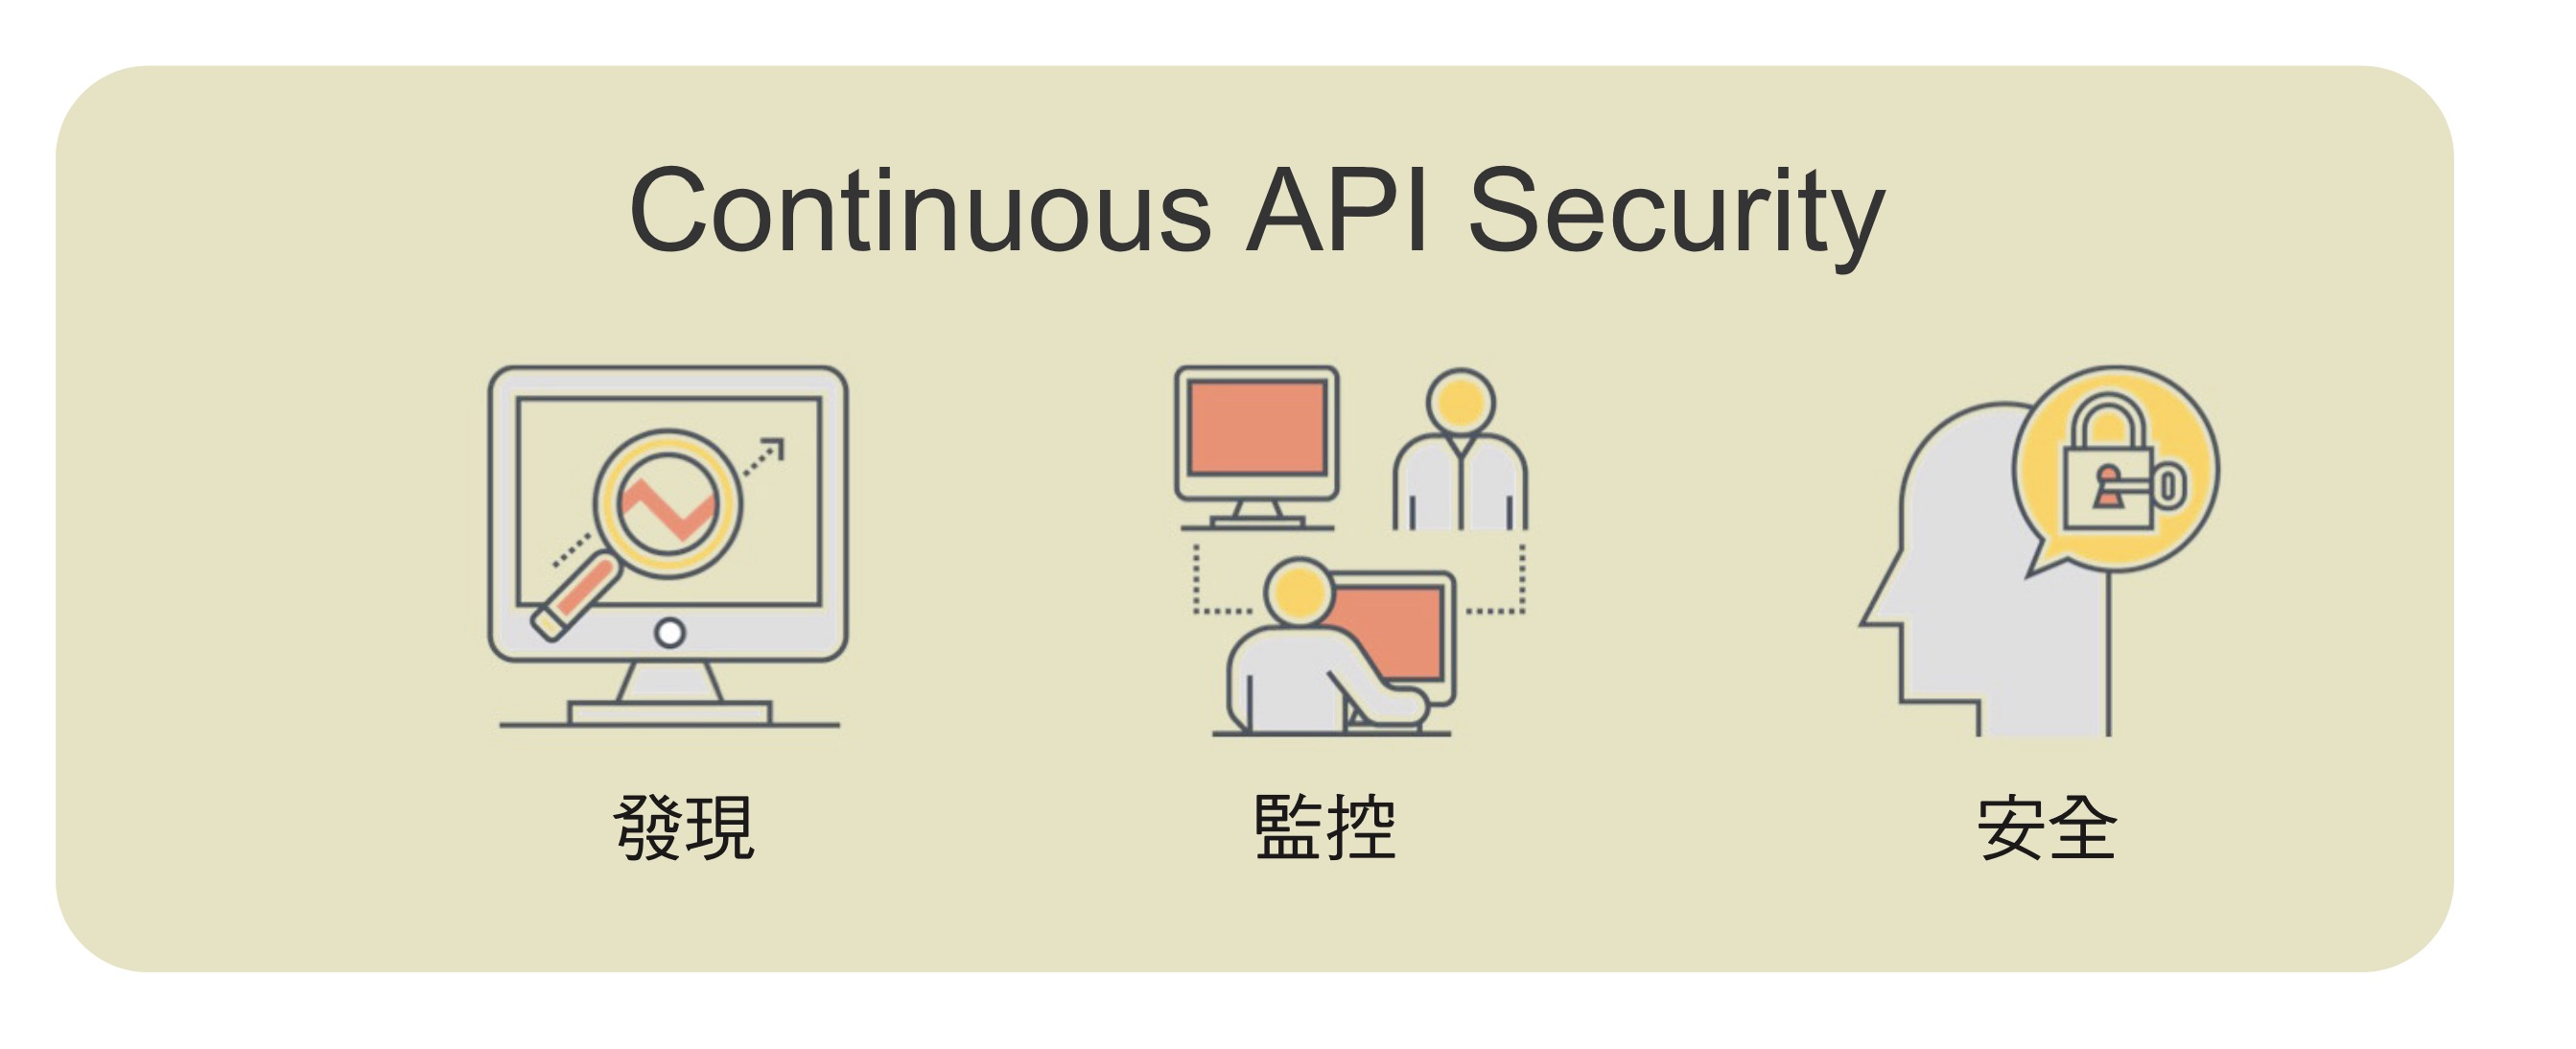 Continuous API Security